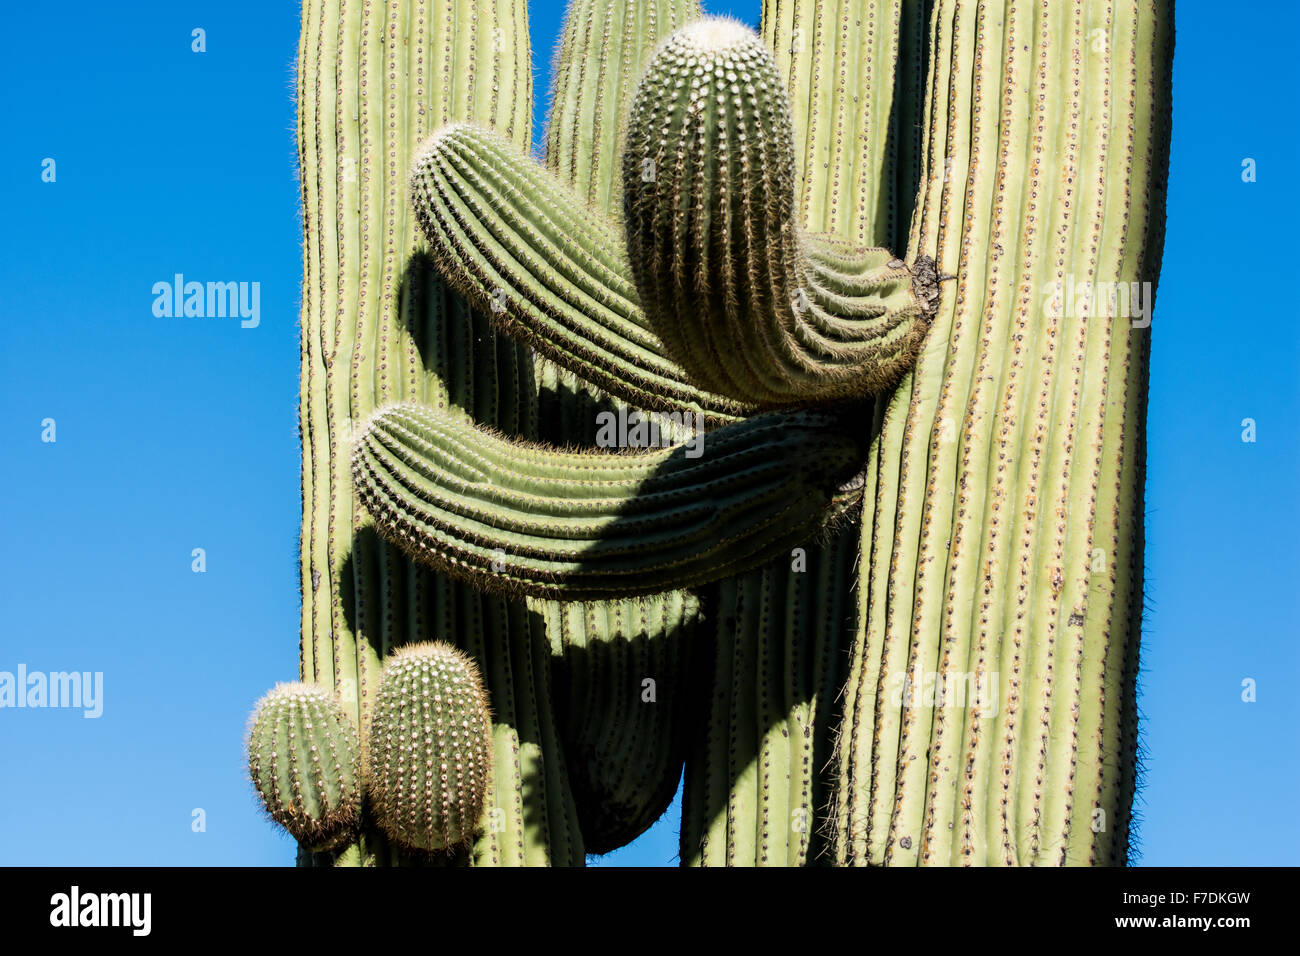 Branches of a giant Saguaro cactus (Carnegiea gigantea) at the Saguaro National Park, Tucson, Arizona, USA. Stock Photo